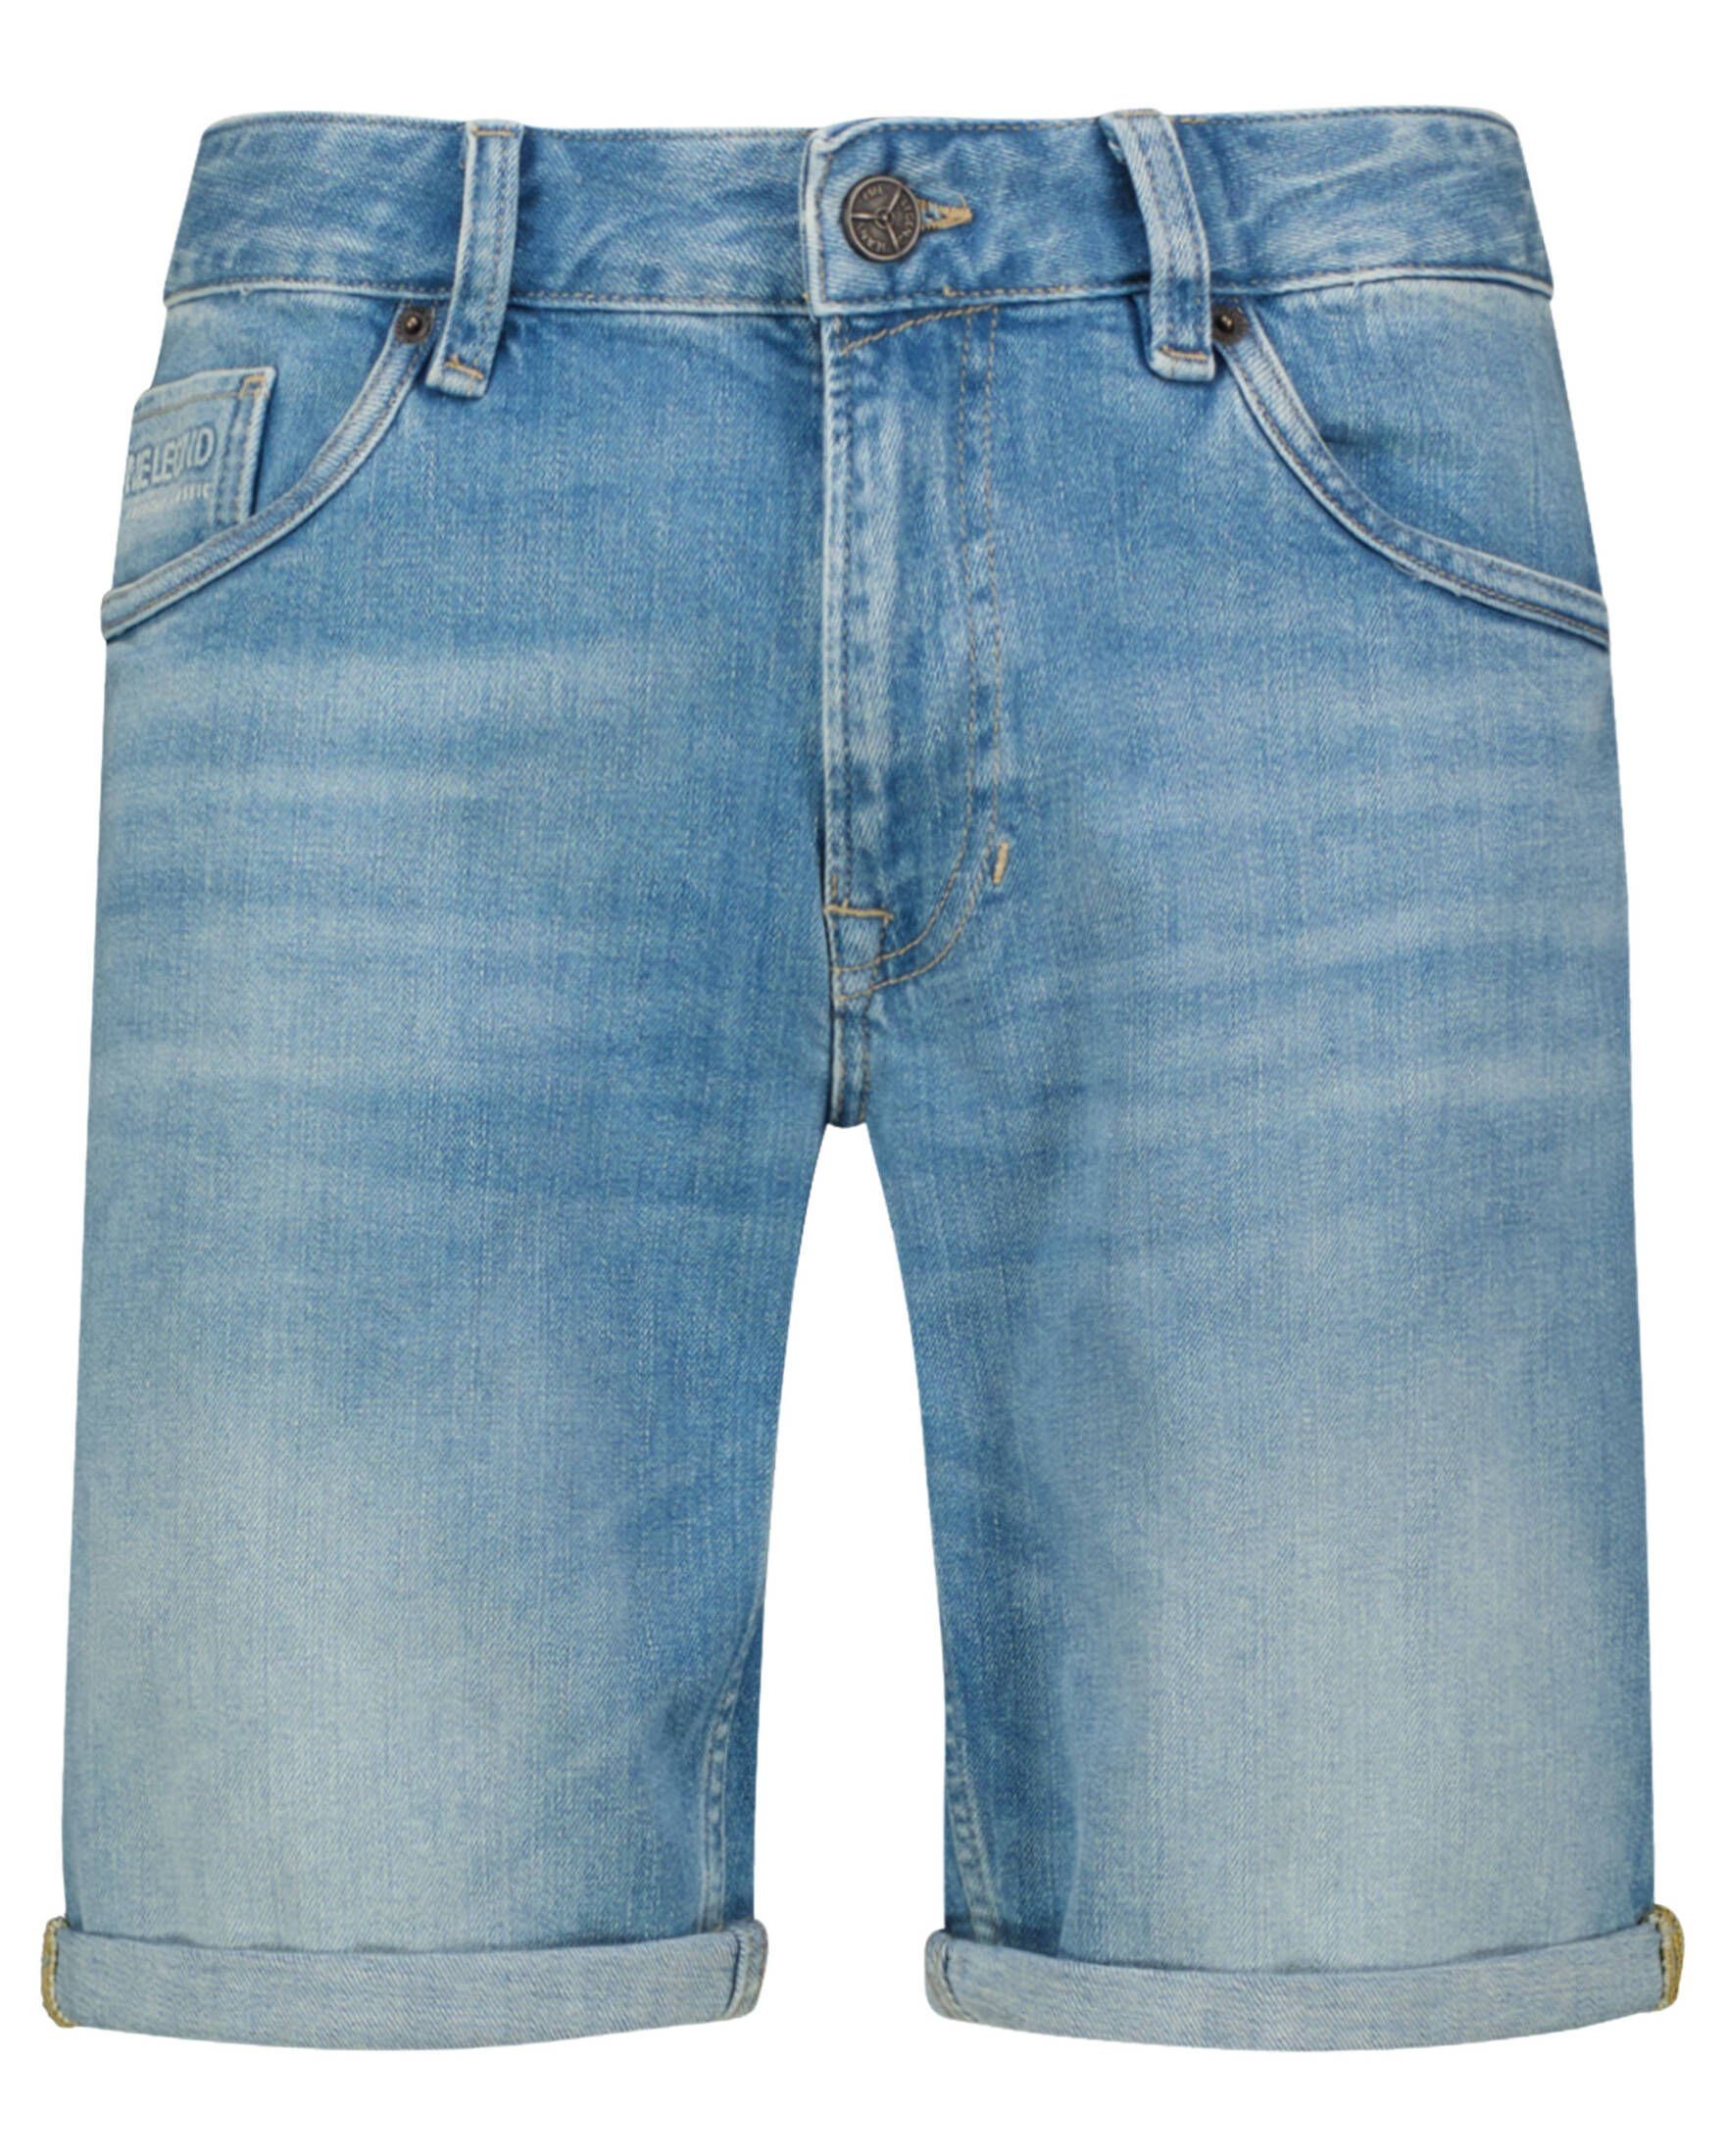 PME LEGEND Fit Jeanshorts Jeansshorts bleached Herren (80) NIGHTFLIGHT Regular